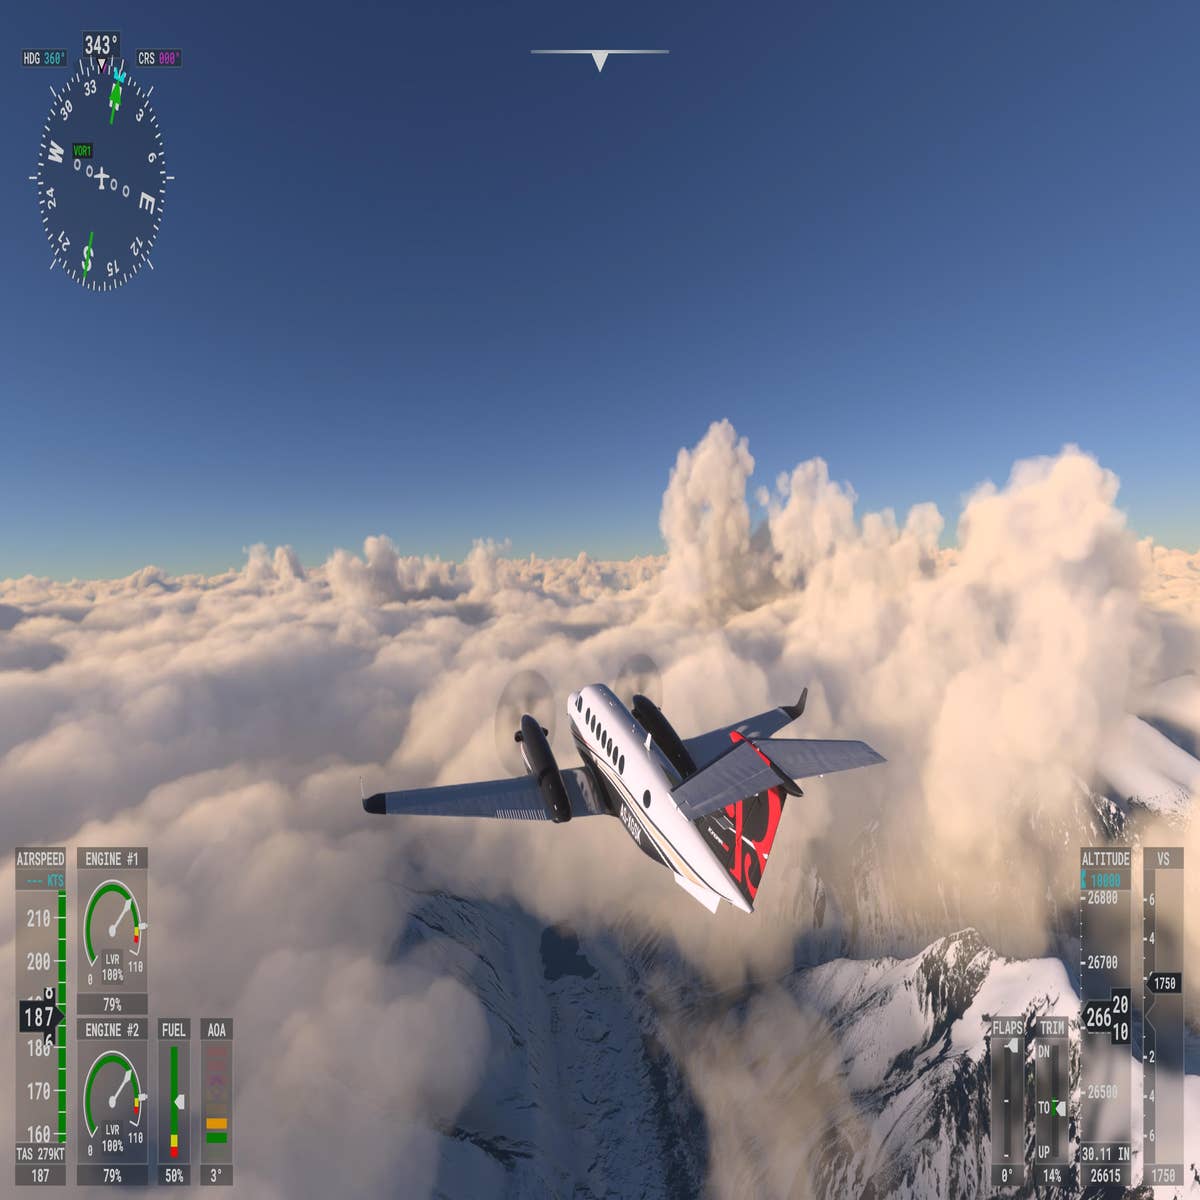 Review: 'Microsoft Flight Simulator' soars for certain crowd